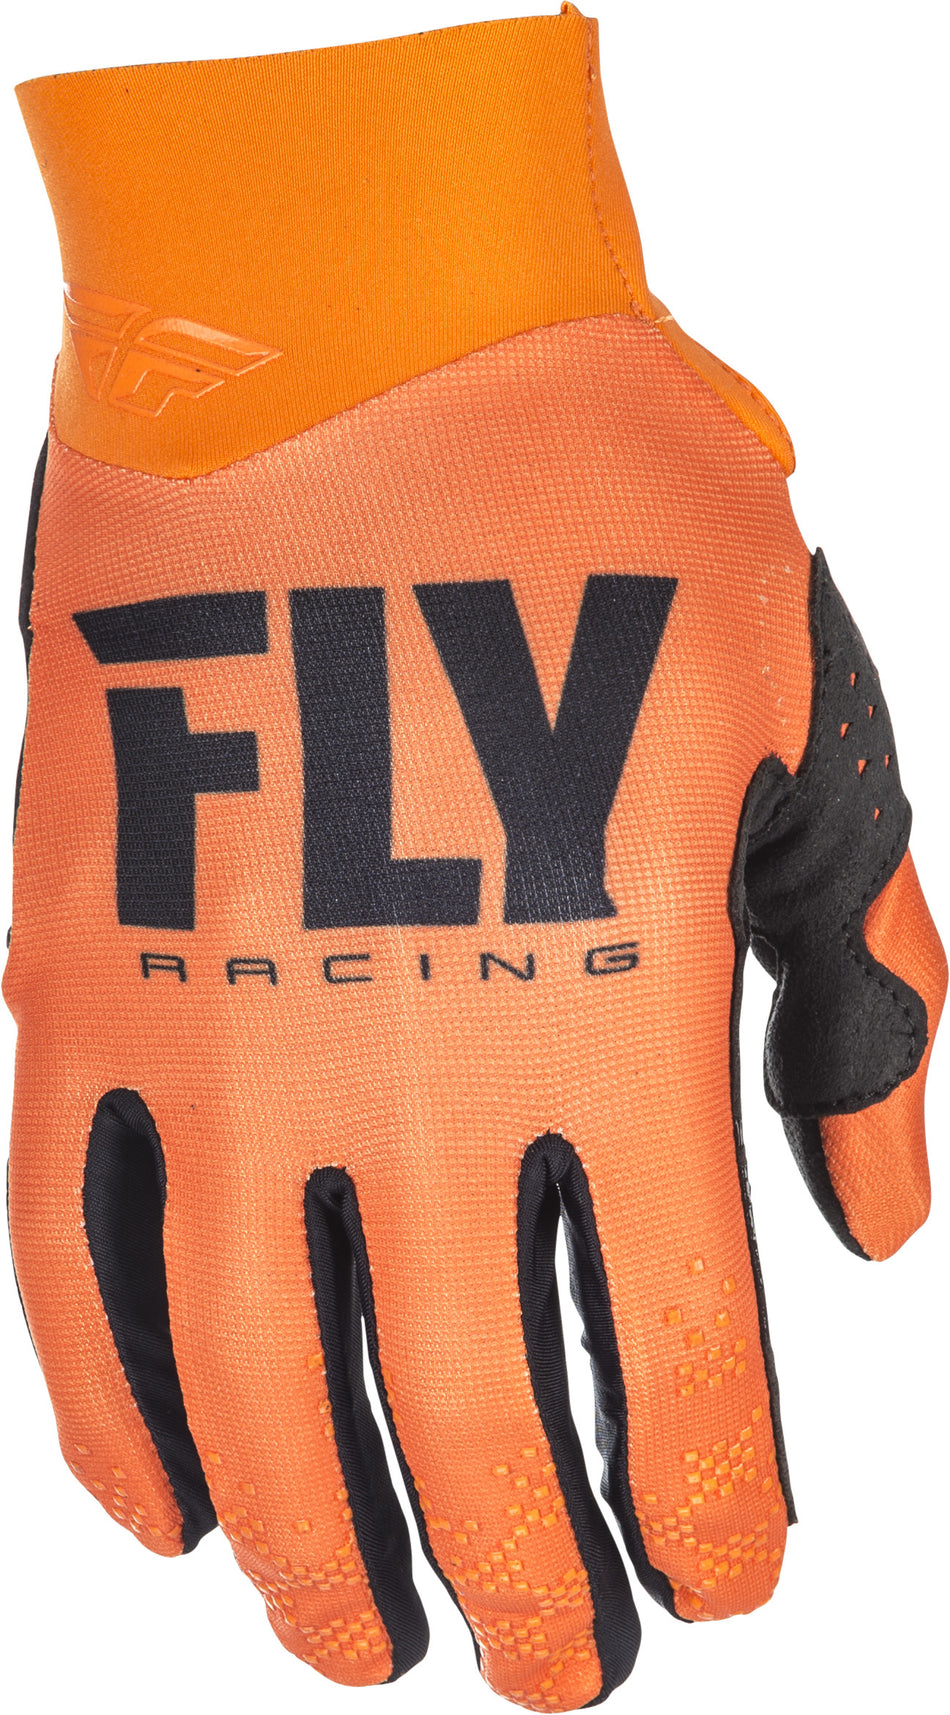 FLY RACING Pro Lite Gloves Orange Sz 9 371-81809